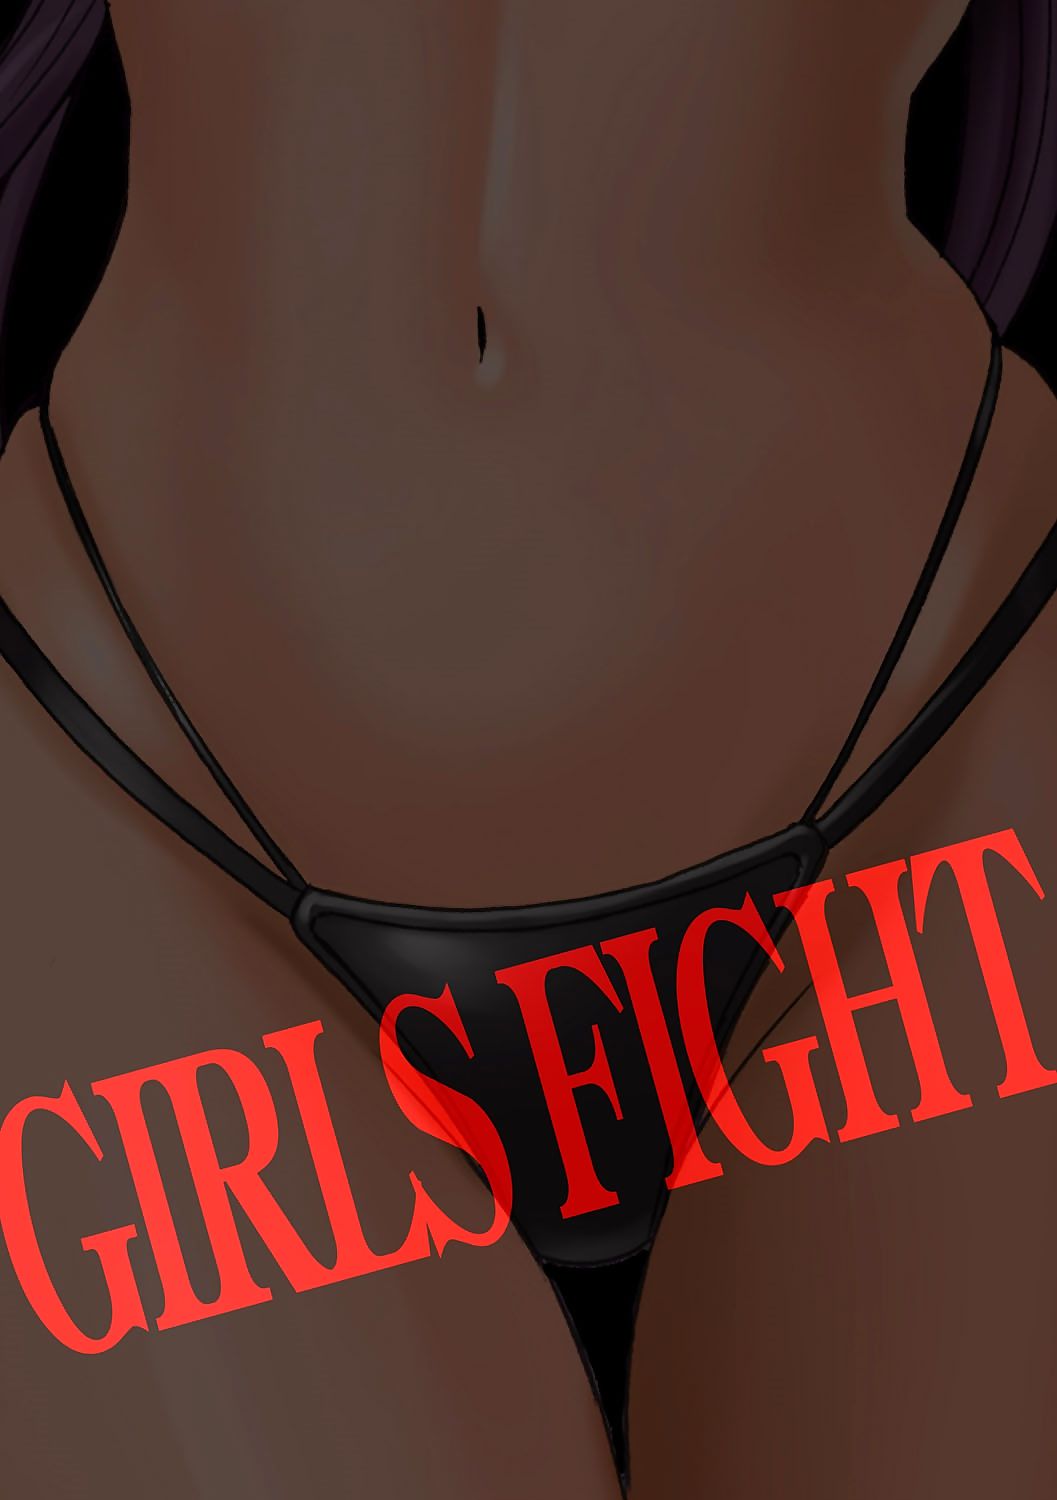 Girls Fight Maya Hen - part 4